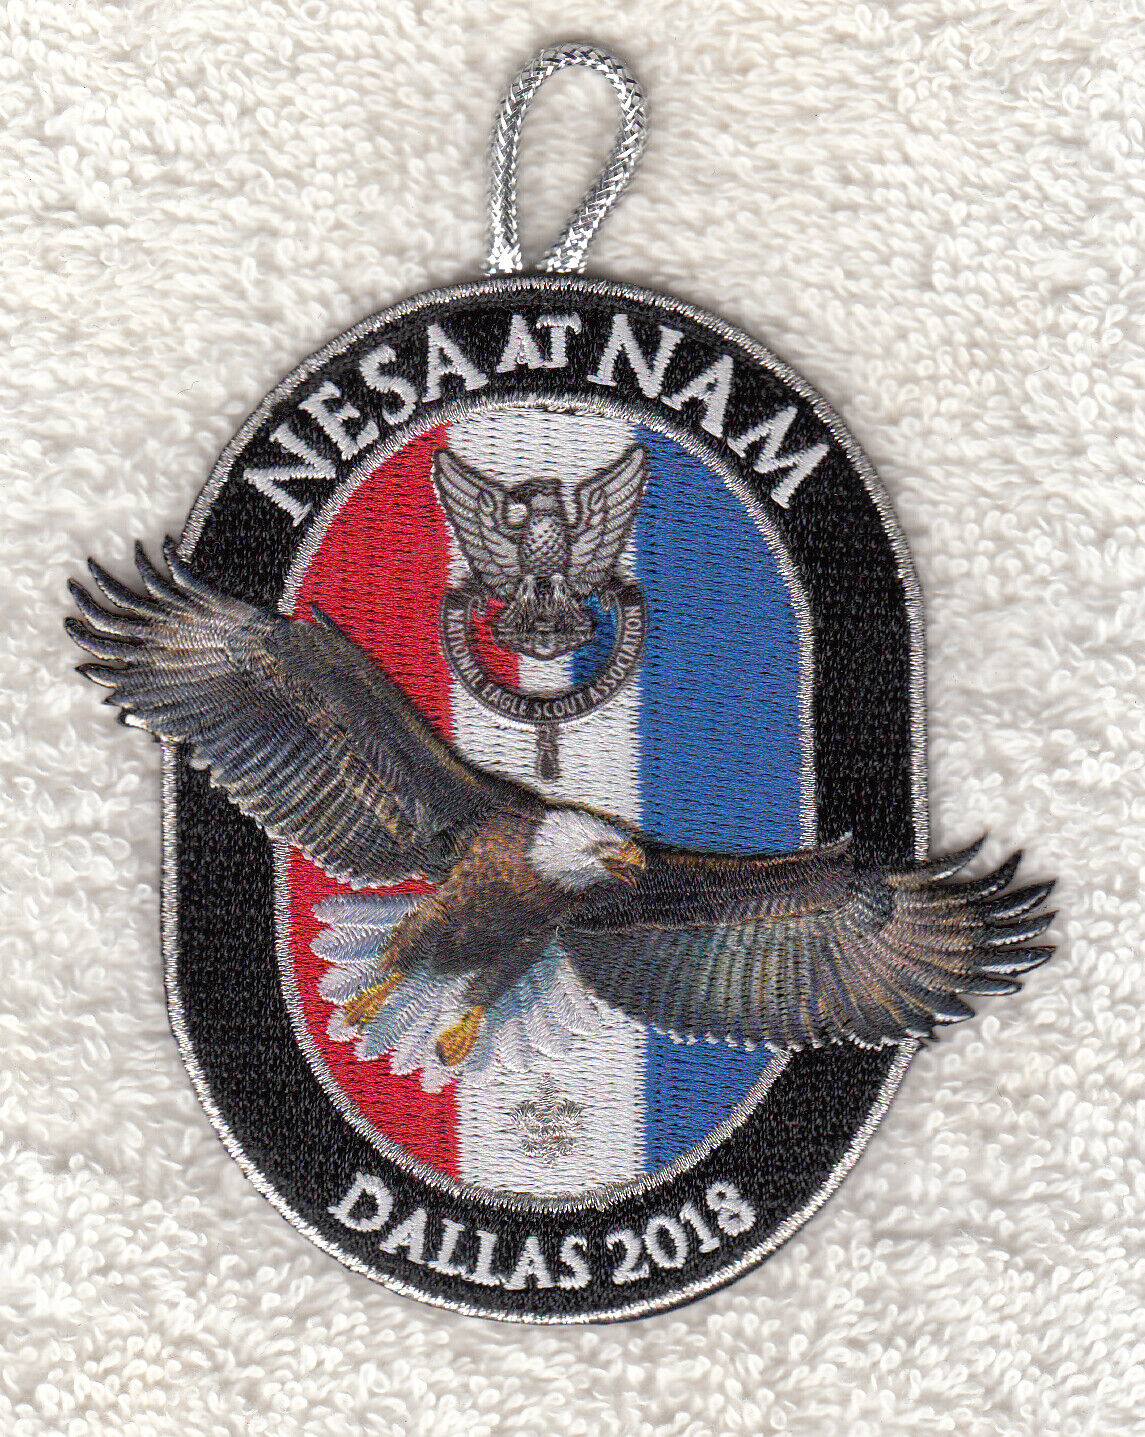 B101 OA BSA Scouts - NESA AT NAM - DALLAS 2018 - NATIONAL ANNUAL MEETING